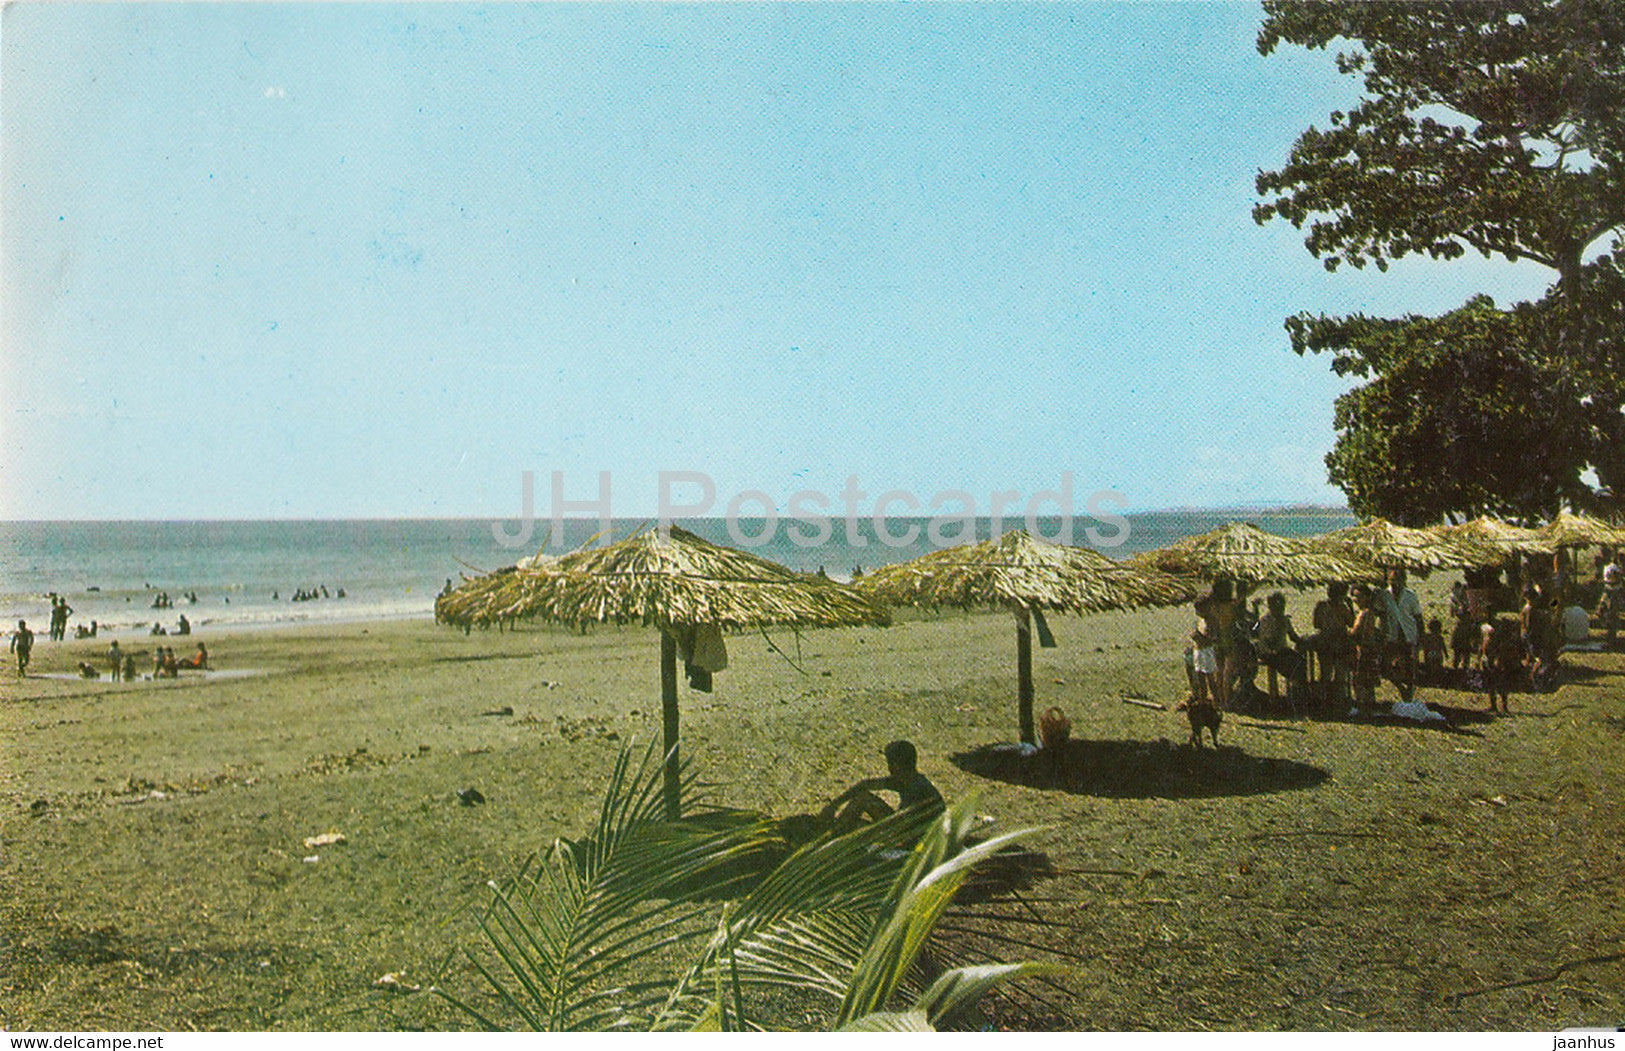 Playas El Cocal - beach - 1982 - Costa Rica - used - JH Postcards